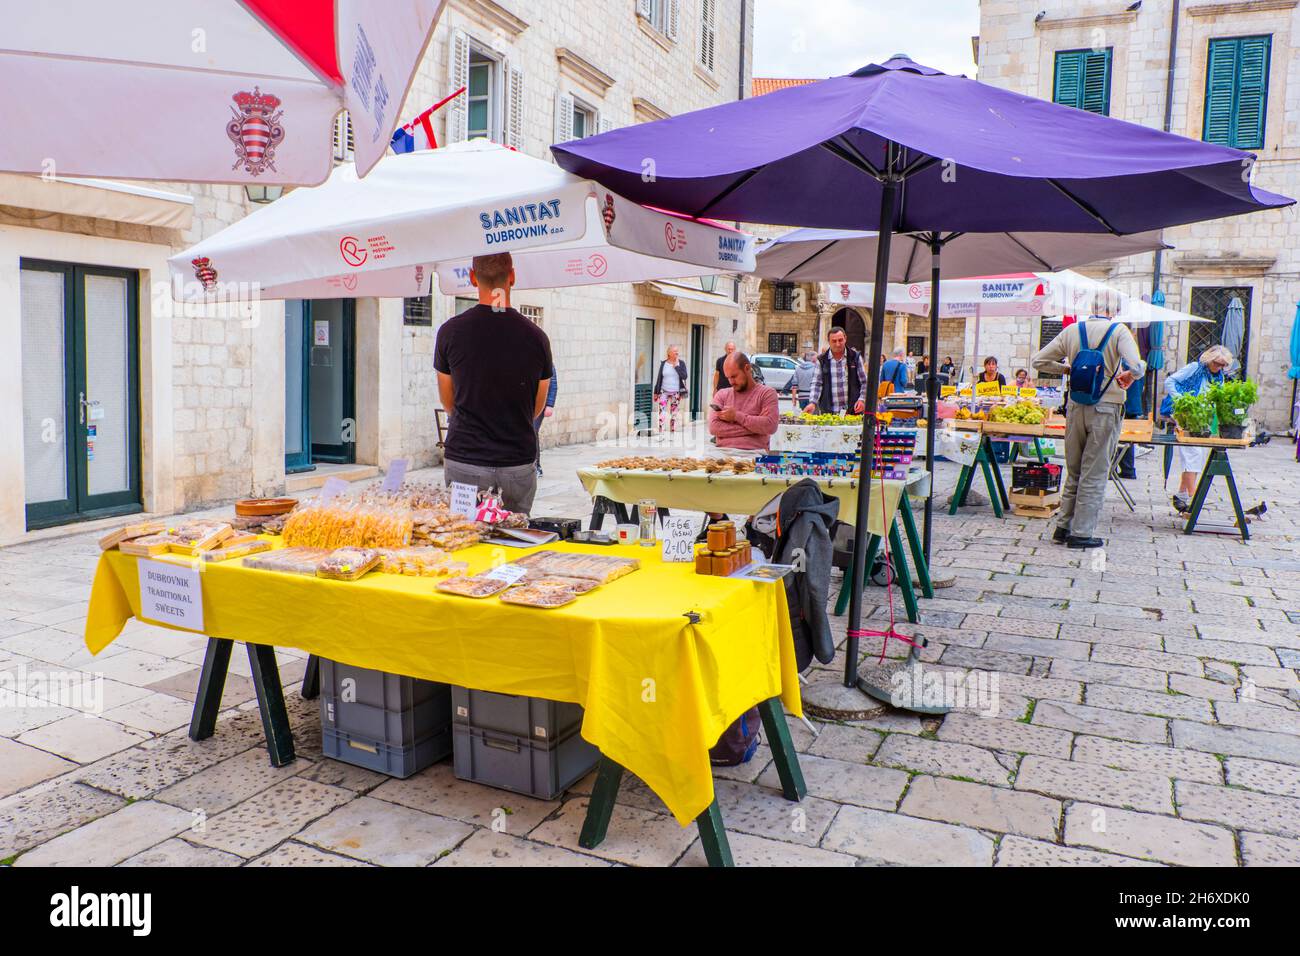 Mercado, Gunduliceva Poljana, Grad, casco antiguo, Dubrovnik, Croacia Foto de stock